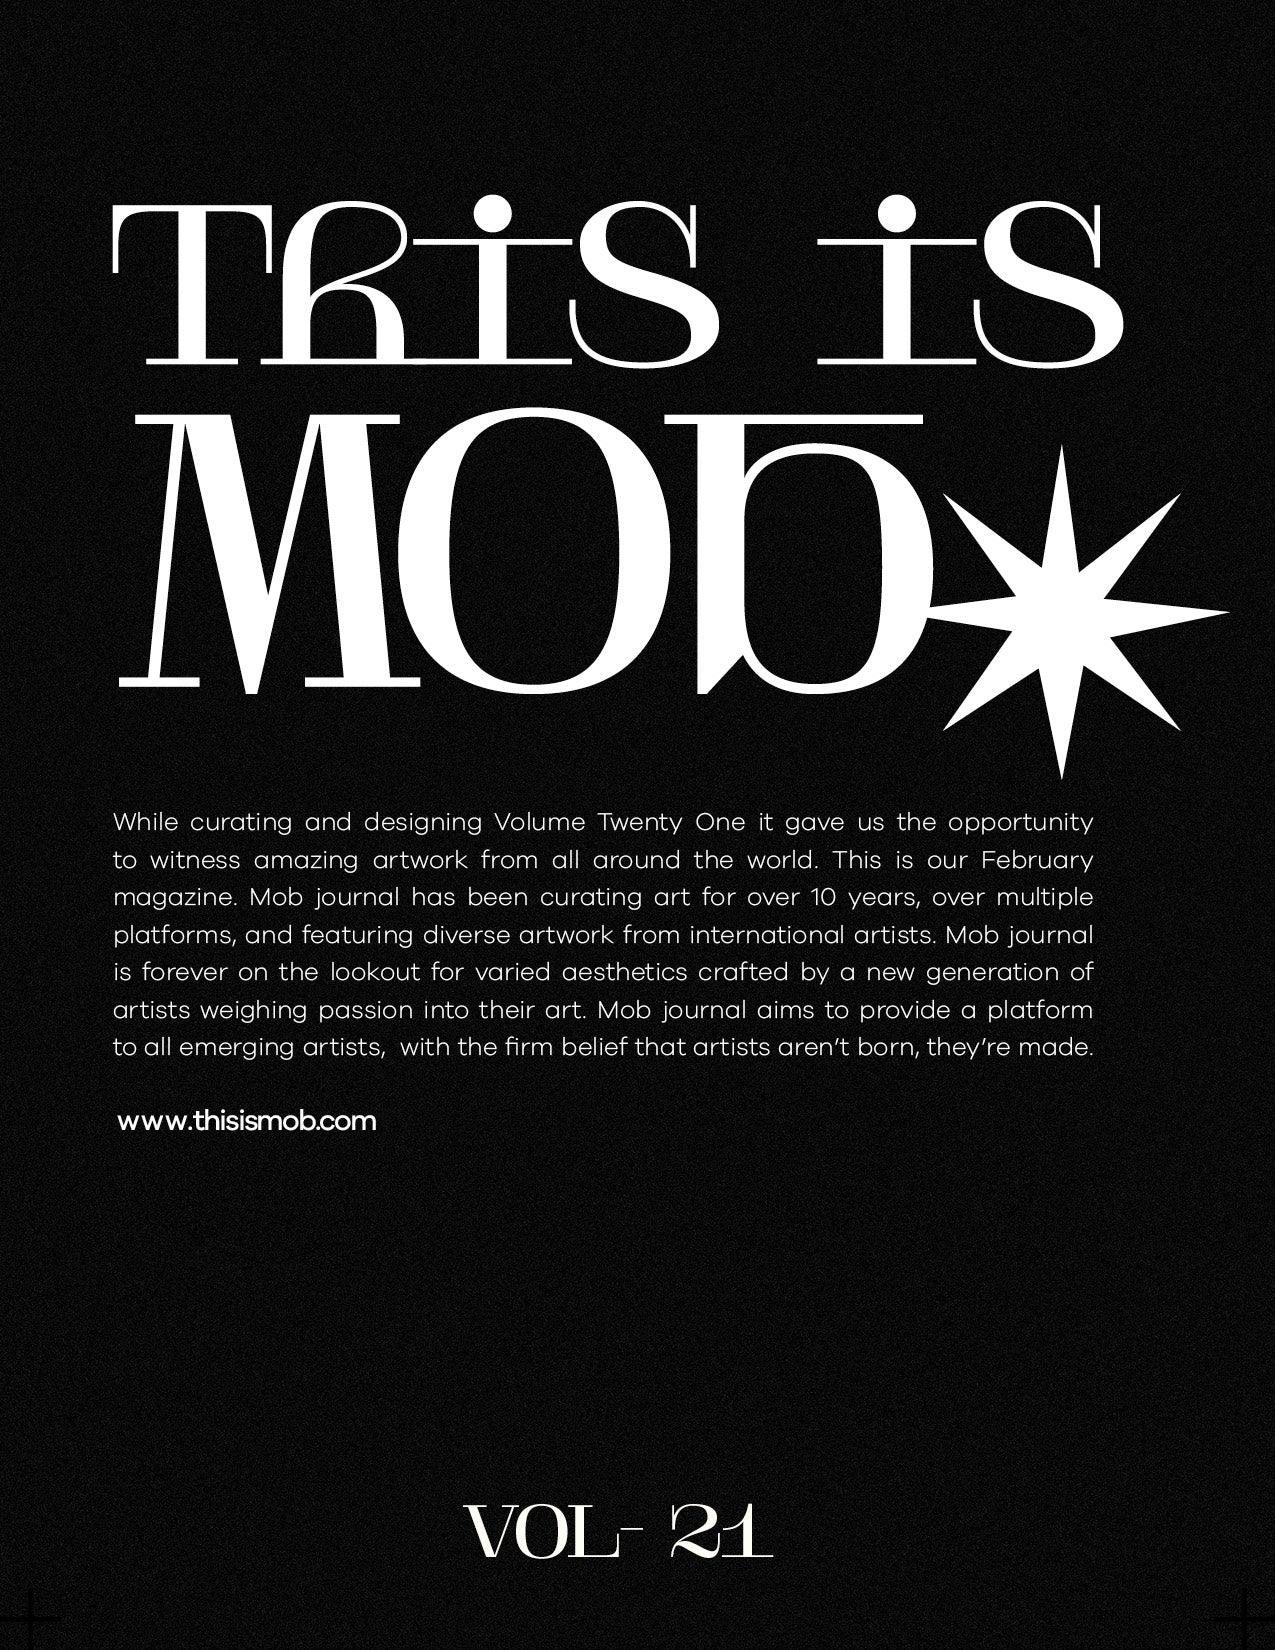 MOB JOURNAL | VOLUME TWENTY ONE | ISSUE #36 - Mob Journal